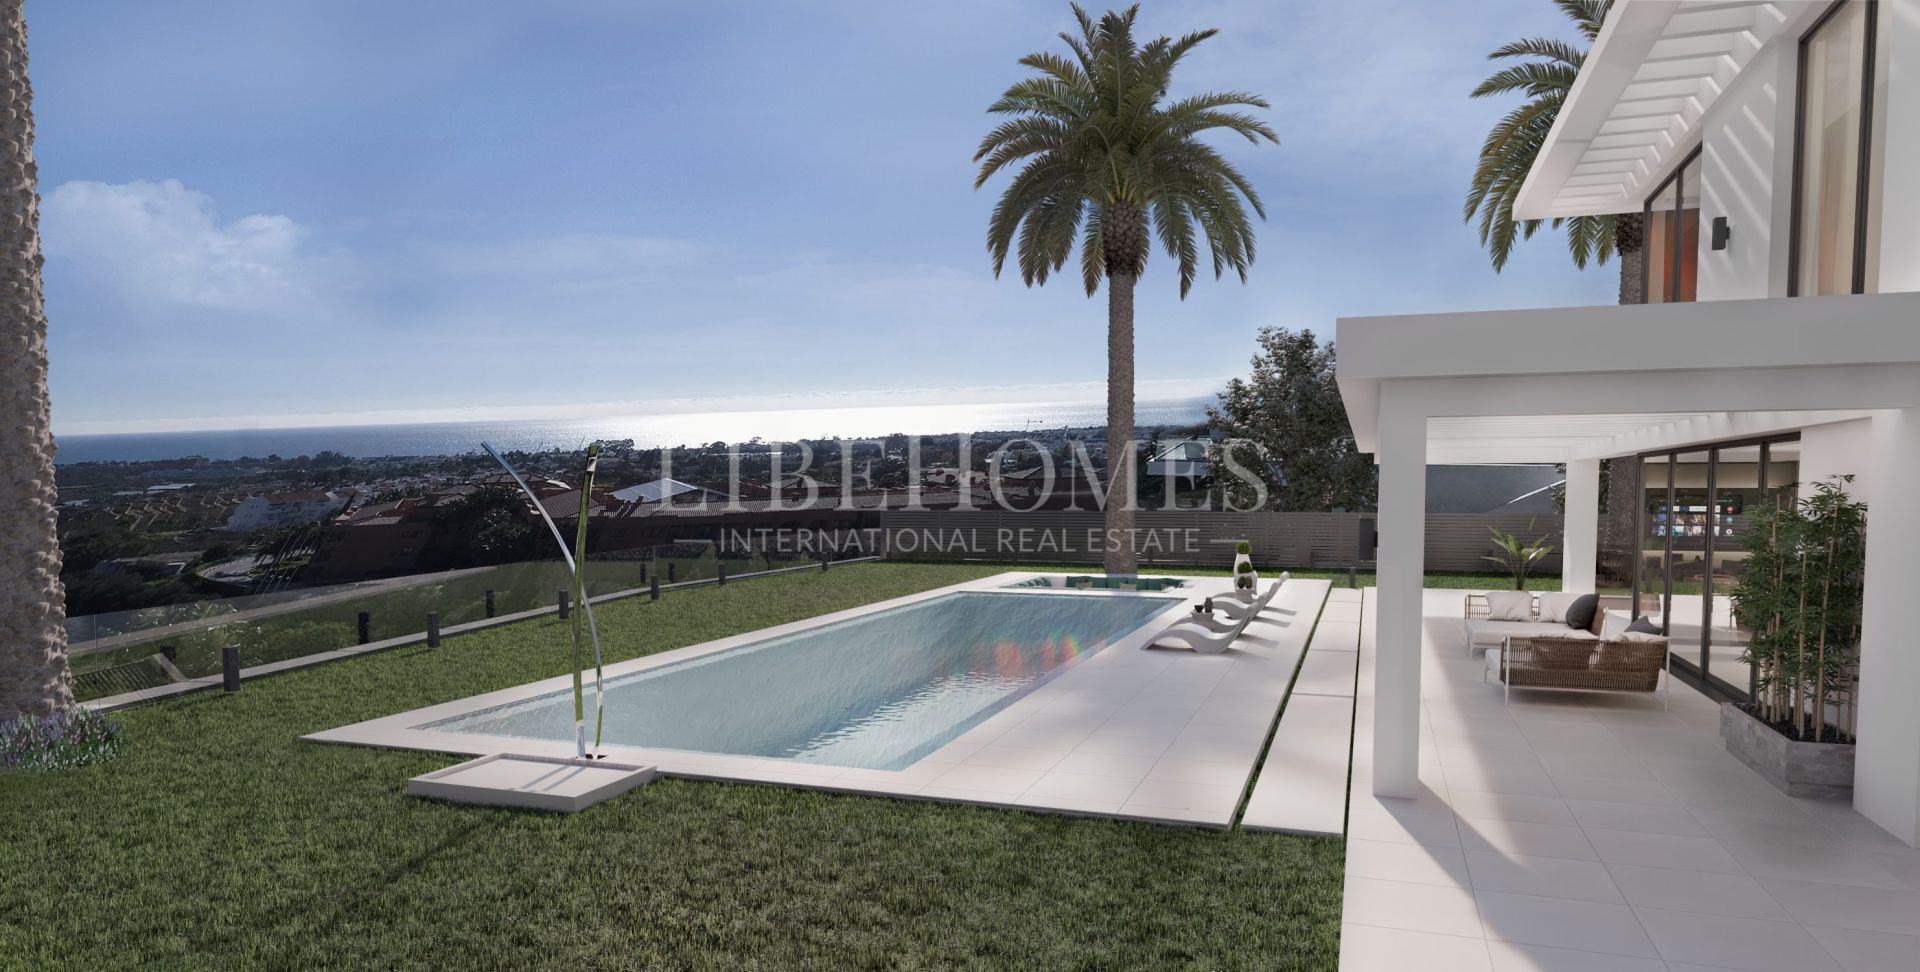 New villa for sale in exclusive golf resort Los Flamingos, Benahavis